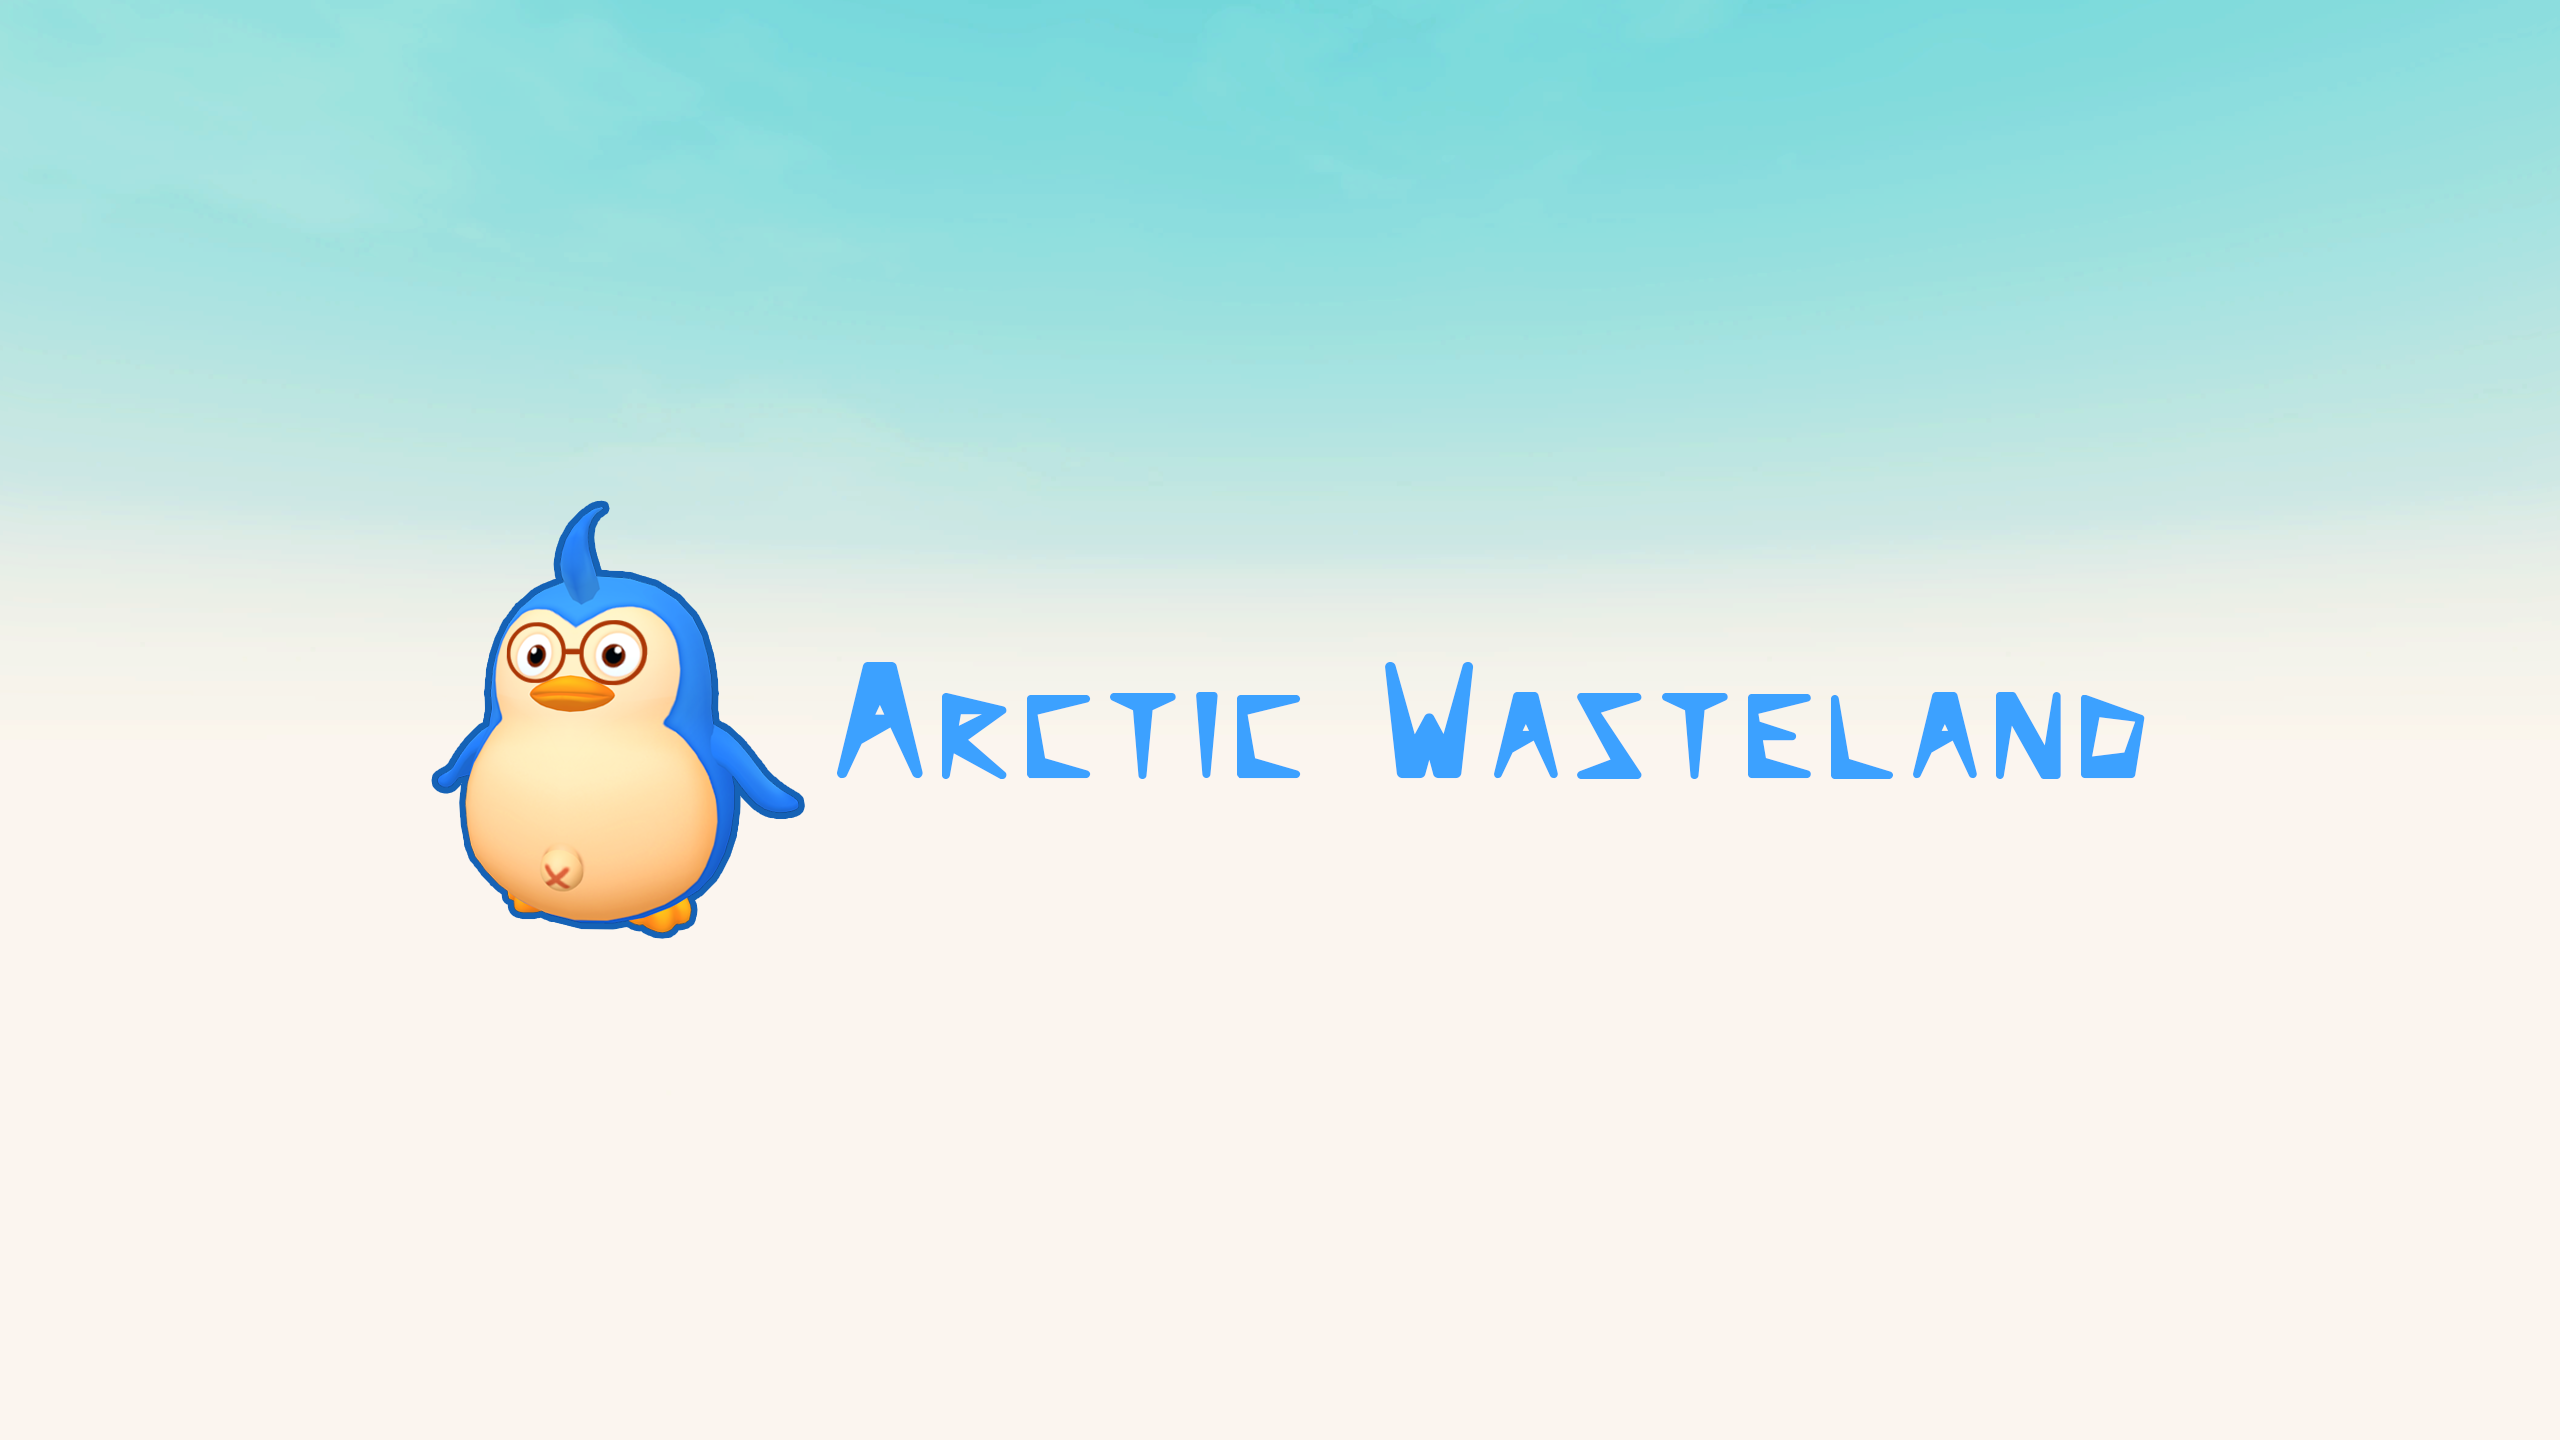 Arctic Wasteland